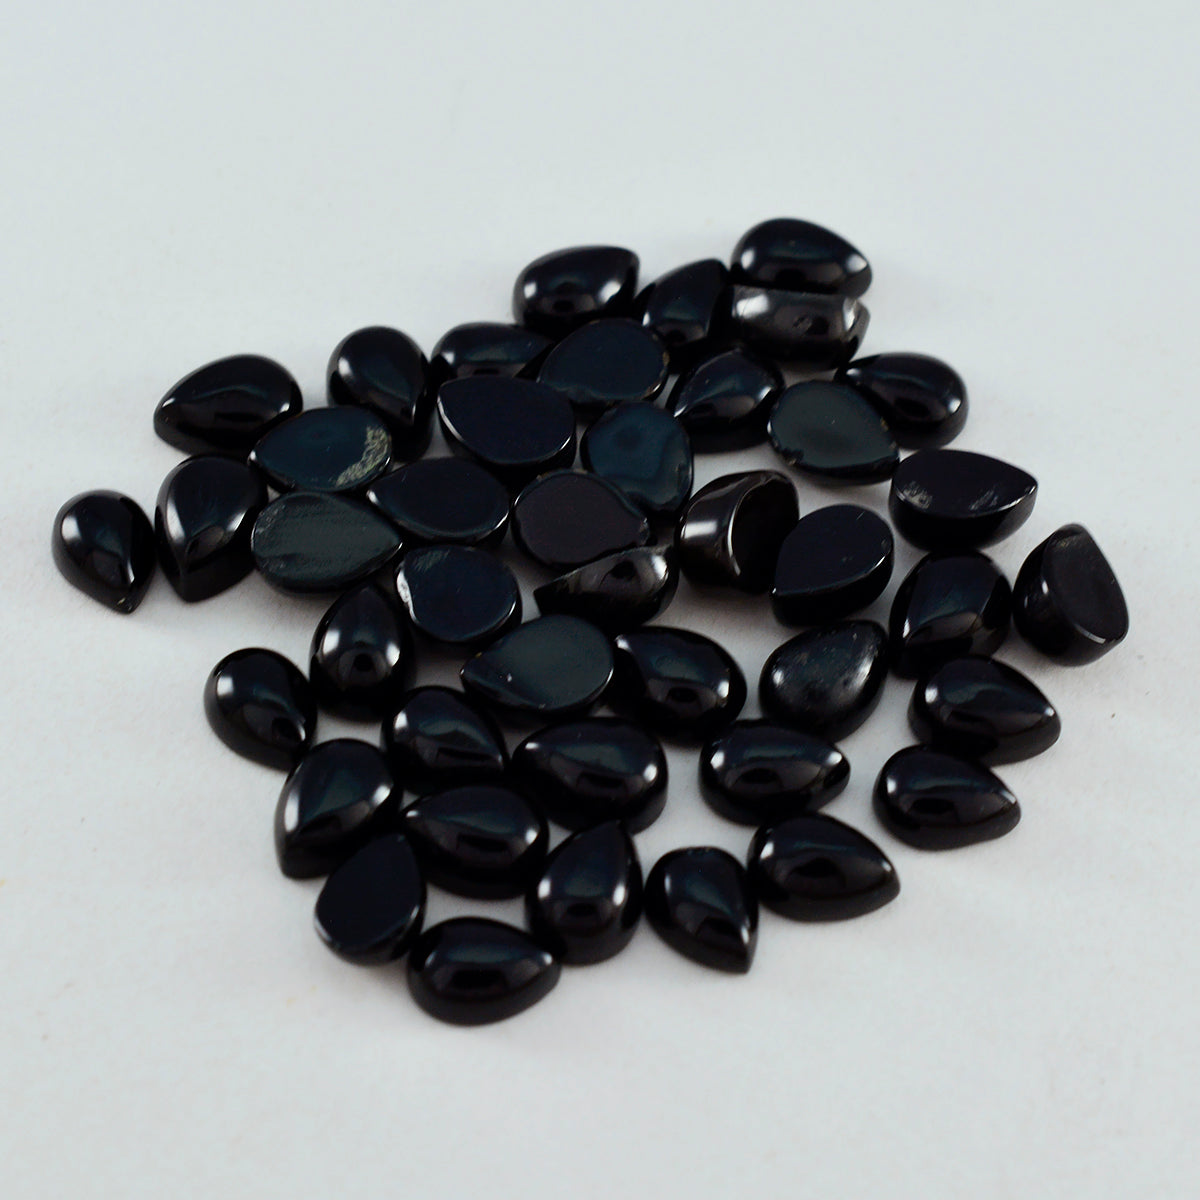 Riyogems 1PC Black Onyx Cabochon 4x6 mm Pear Shape superb Quality Loose Gems